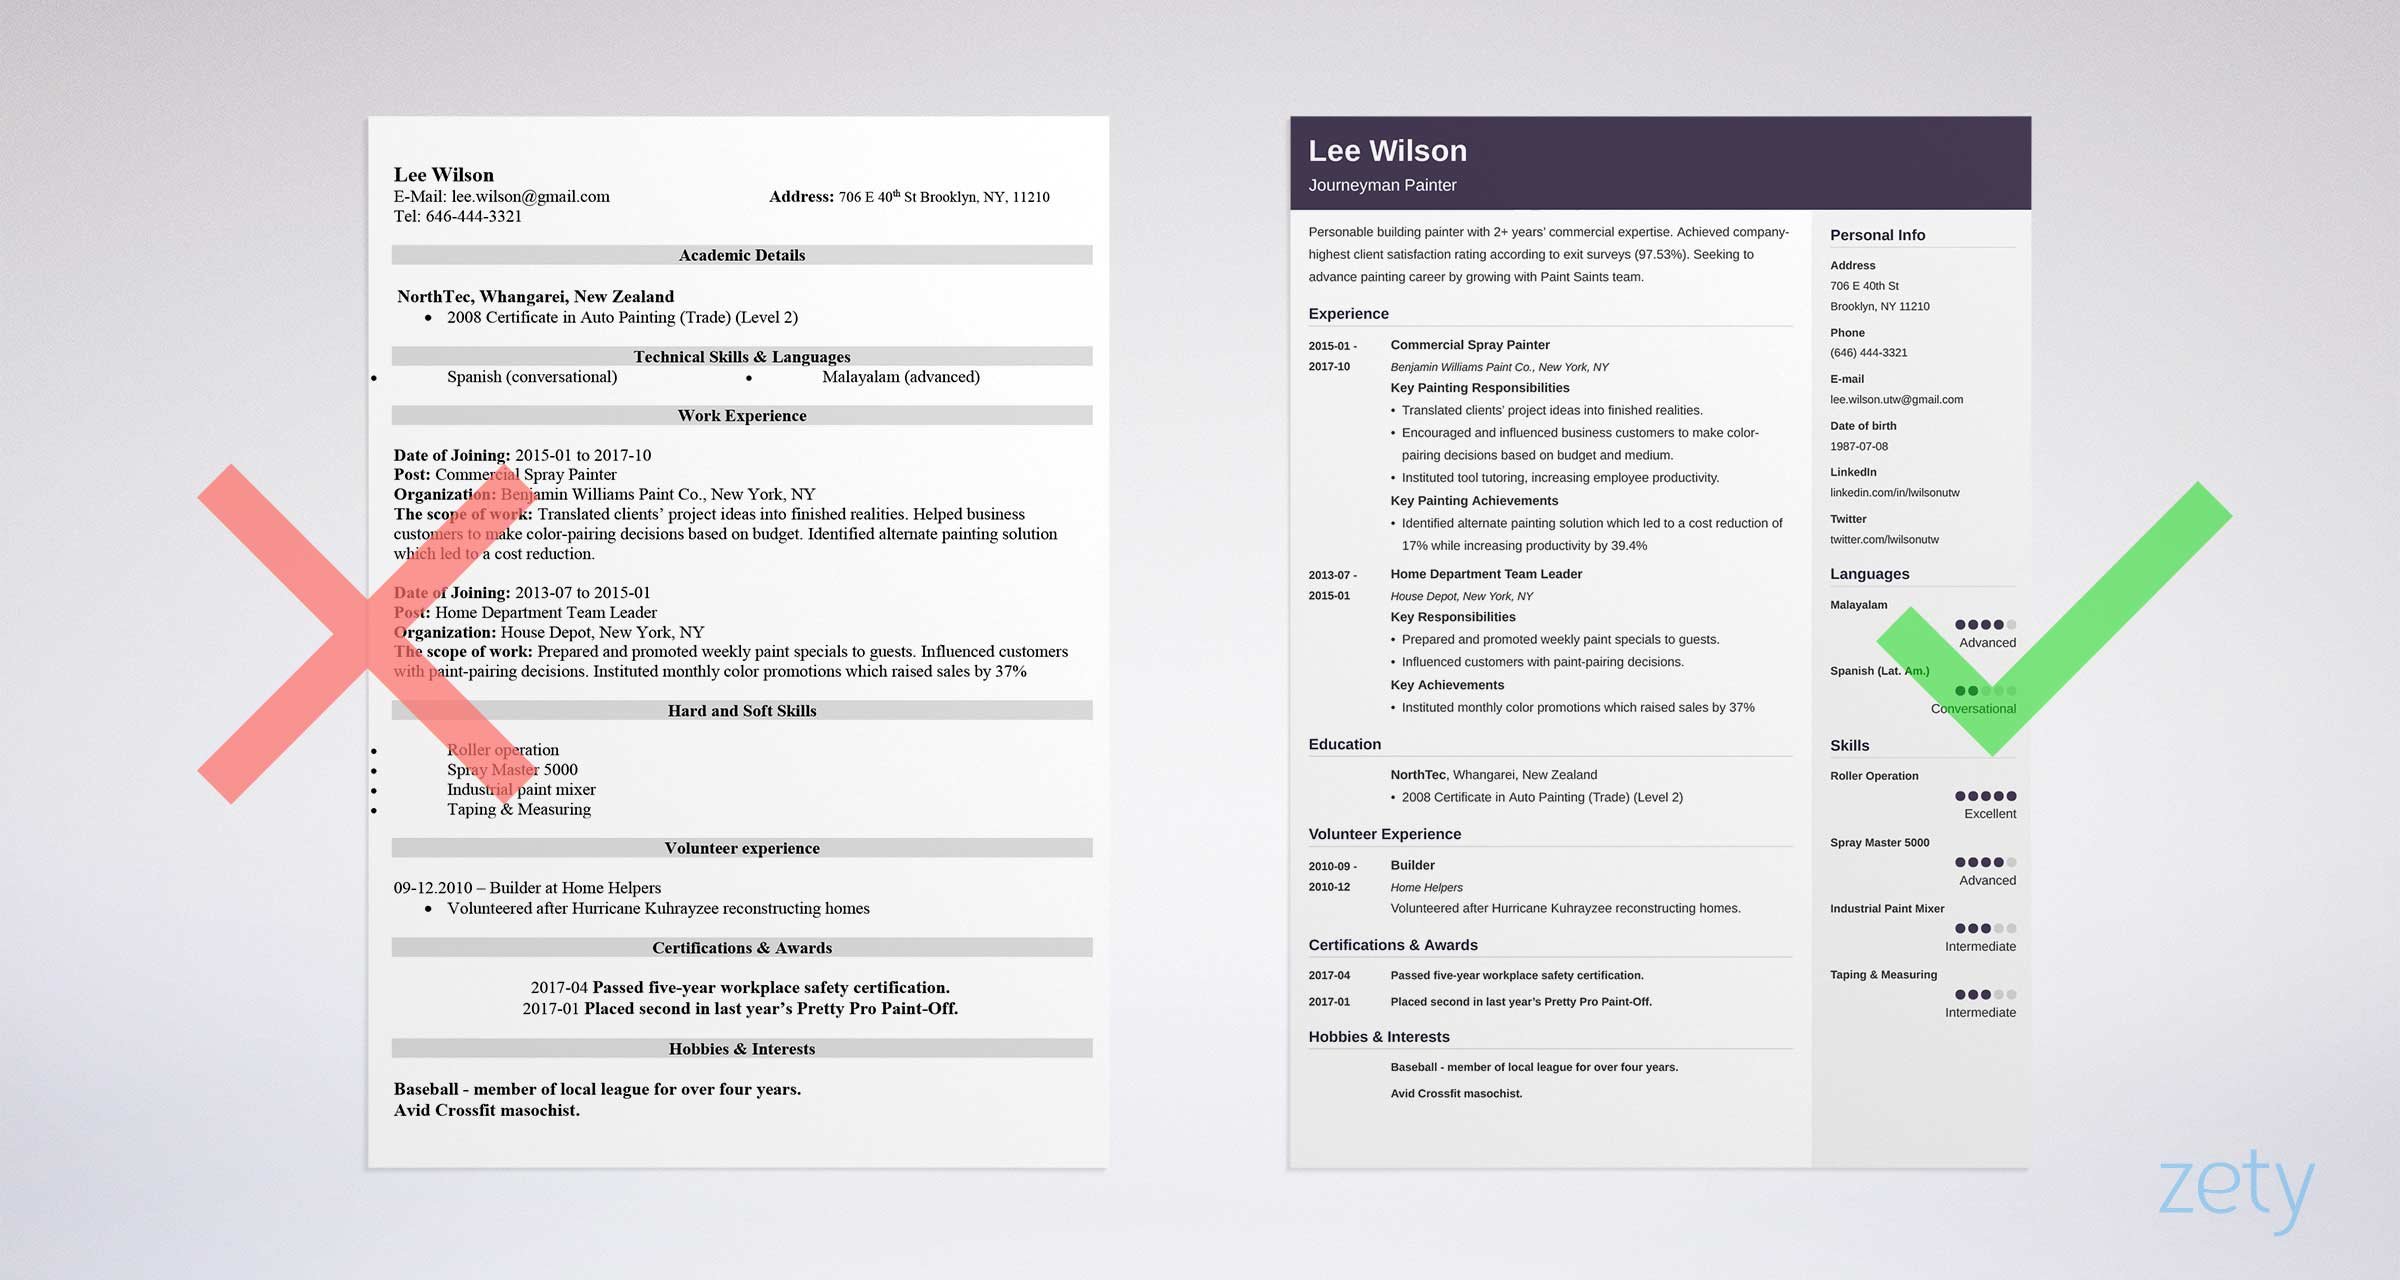 Creative Resume Template Free Pretty Resume Templates Unique Downloadable To Use Now Unique Resume Templates 00 Word creative resume template free|wikiresume.com